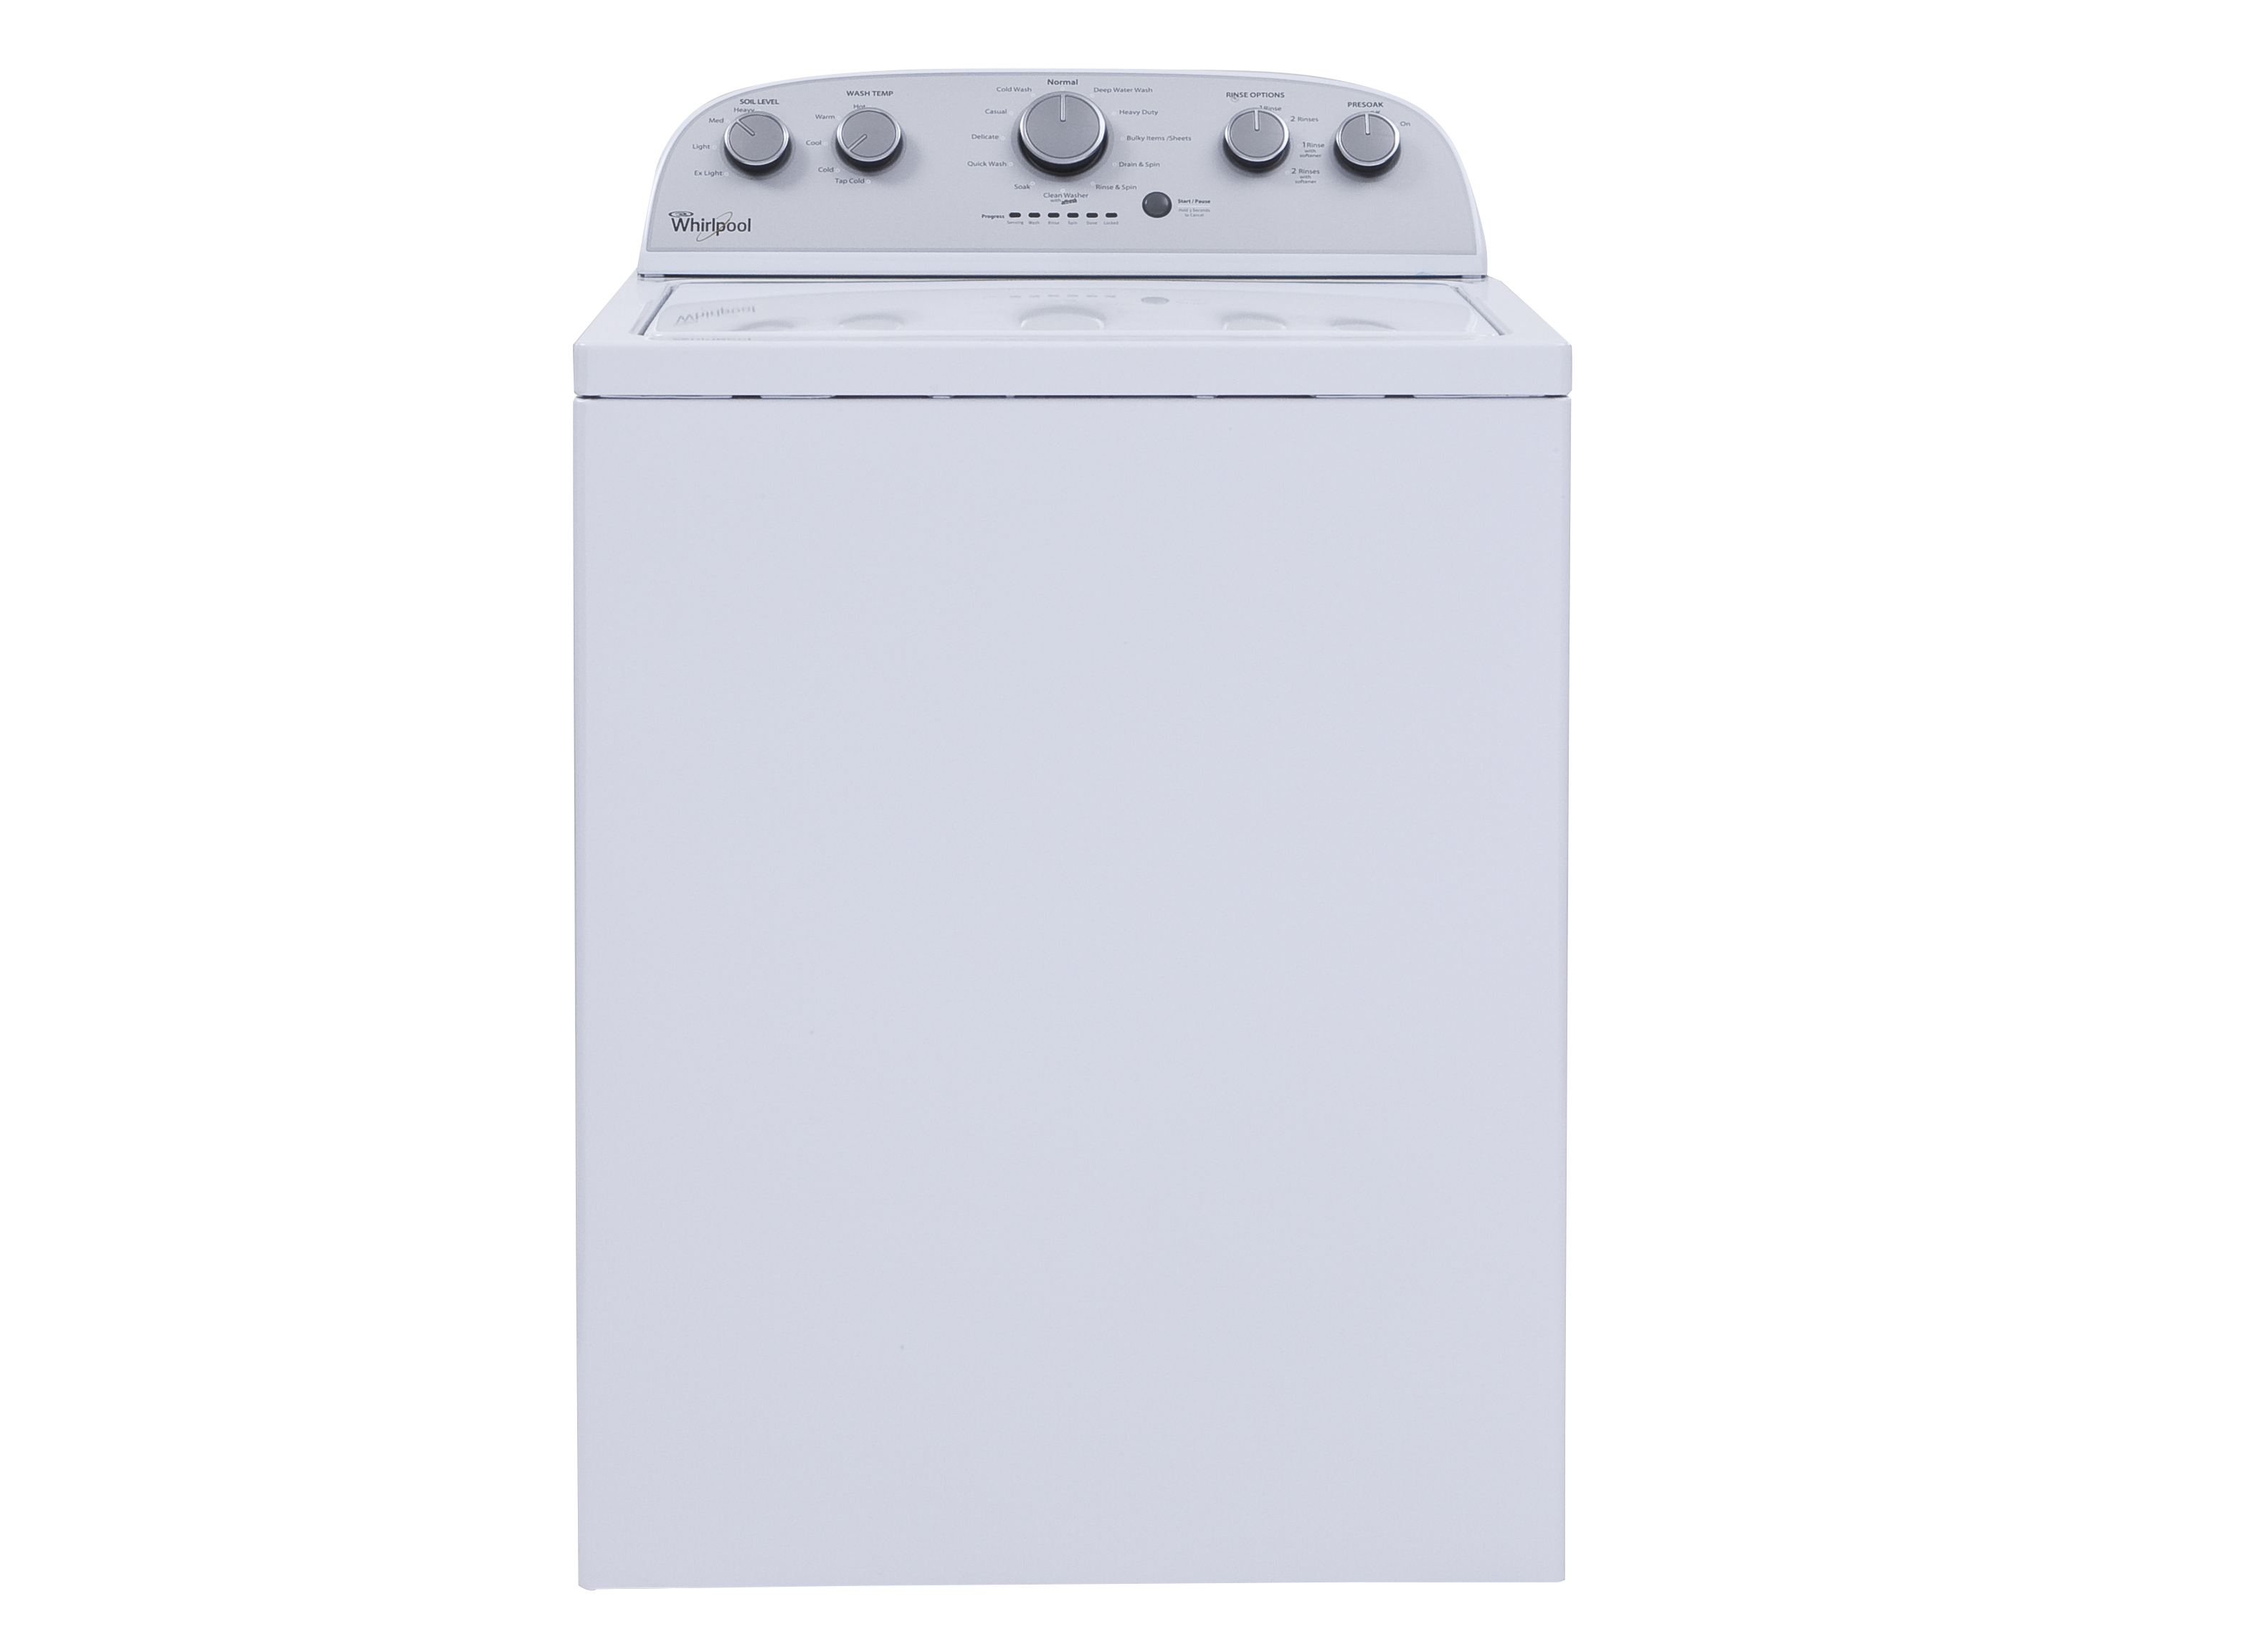 Whirlpool Wtw5000dw Washing Machine Consumer Reports